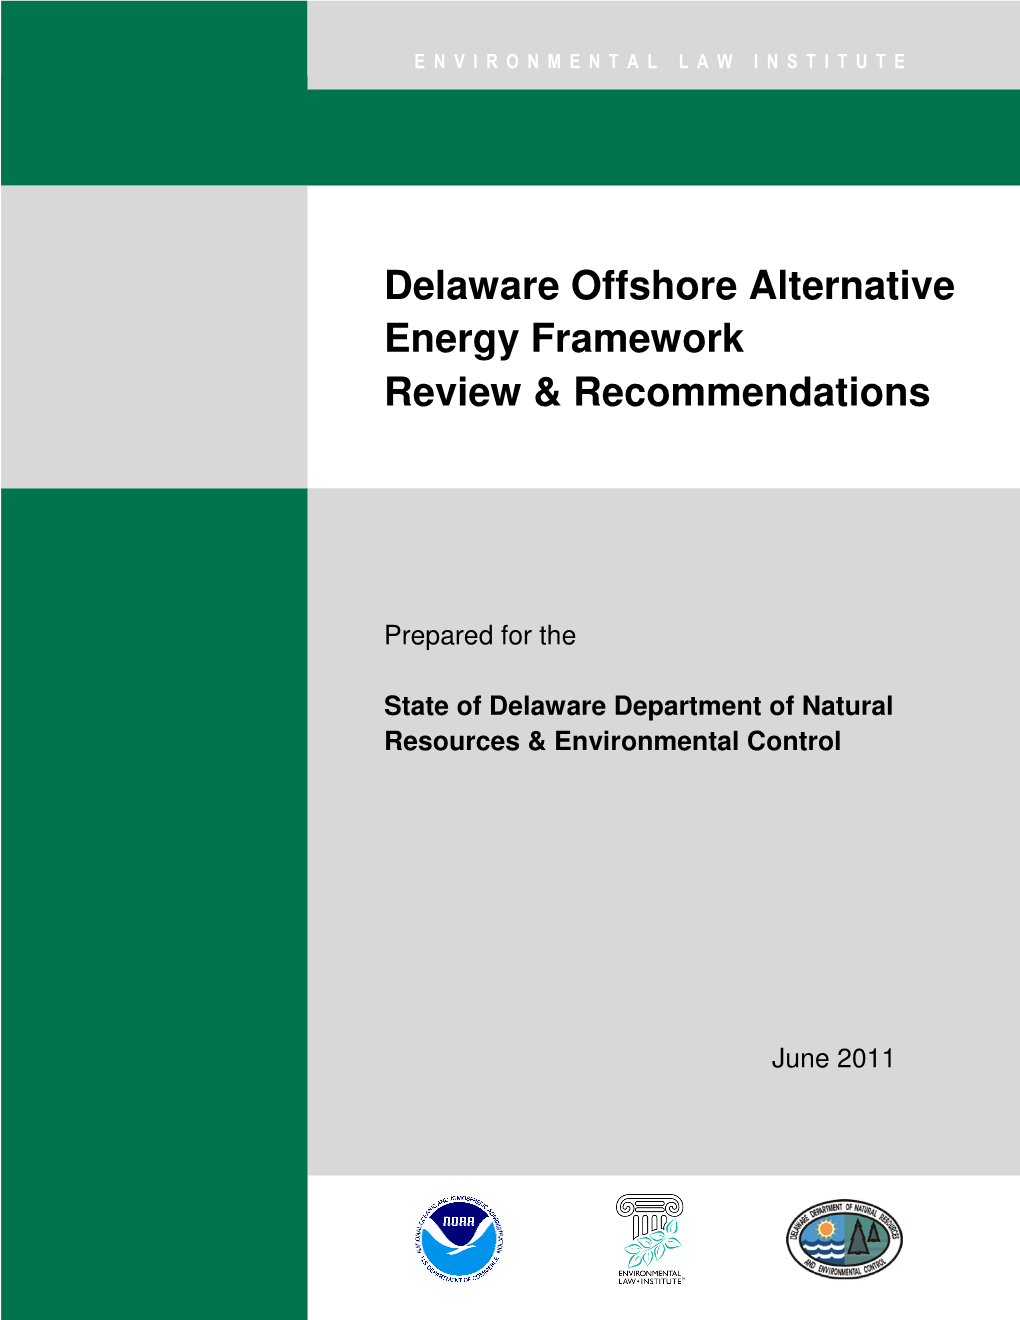 Delaware Offshore Alternative Energy Framework Review & Recommendations